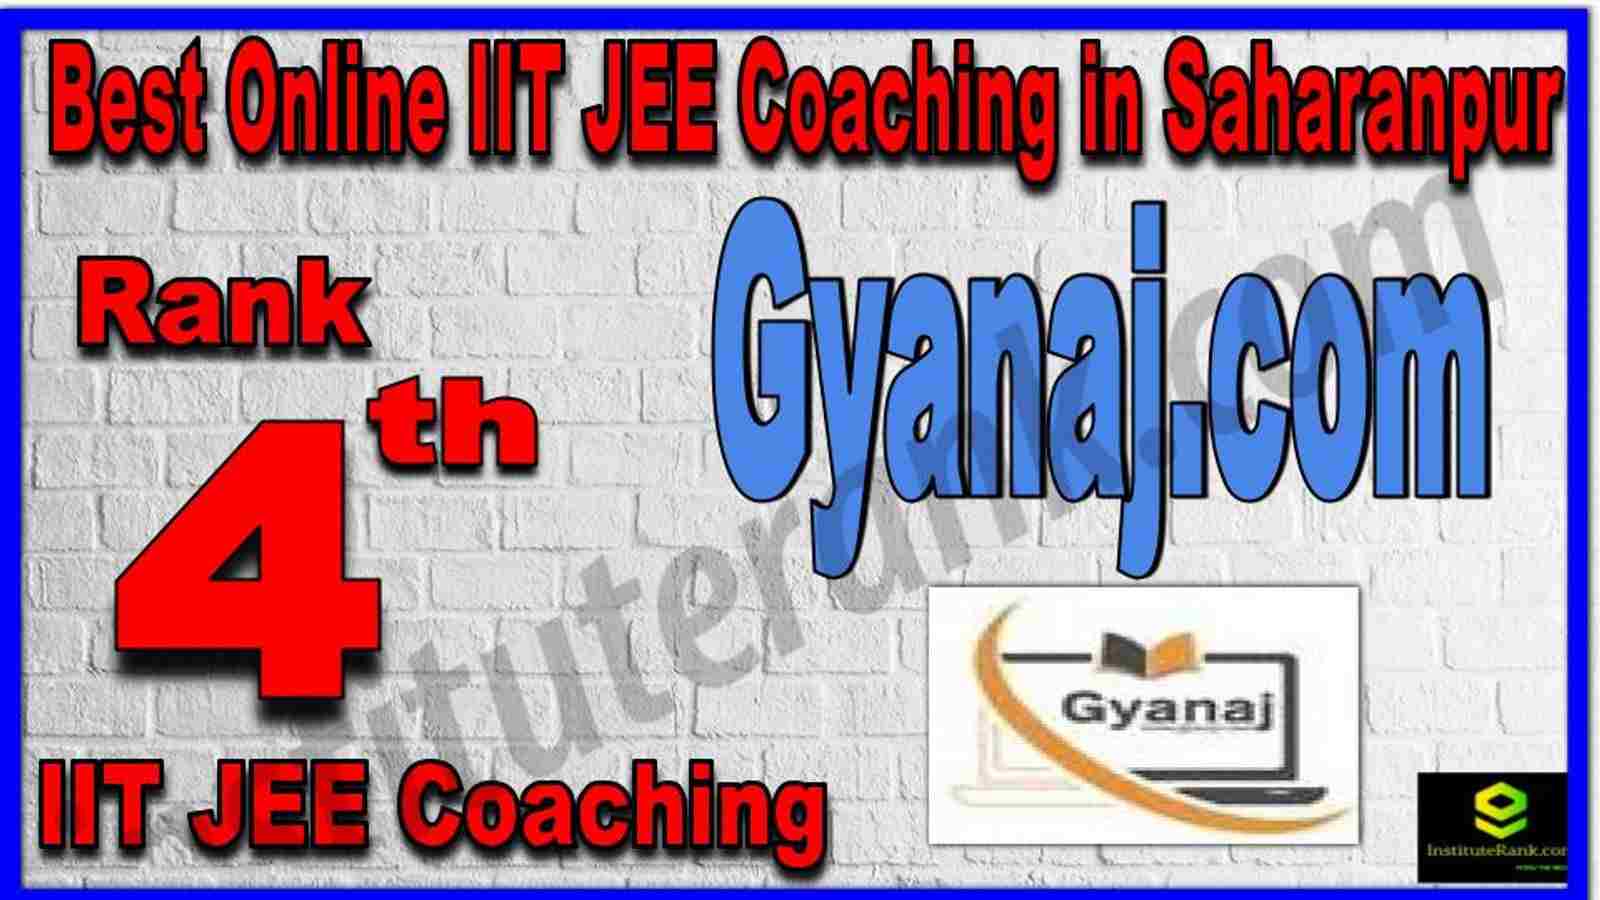 Rank 4th Best Online IIT JEE Coaching in Saharanpur